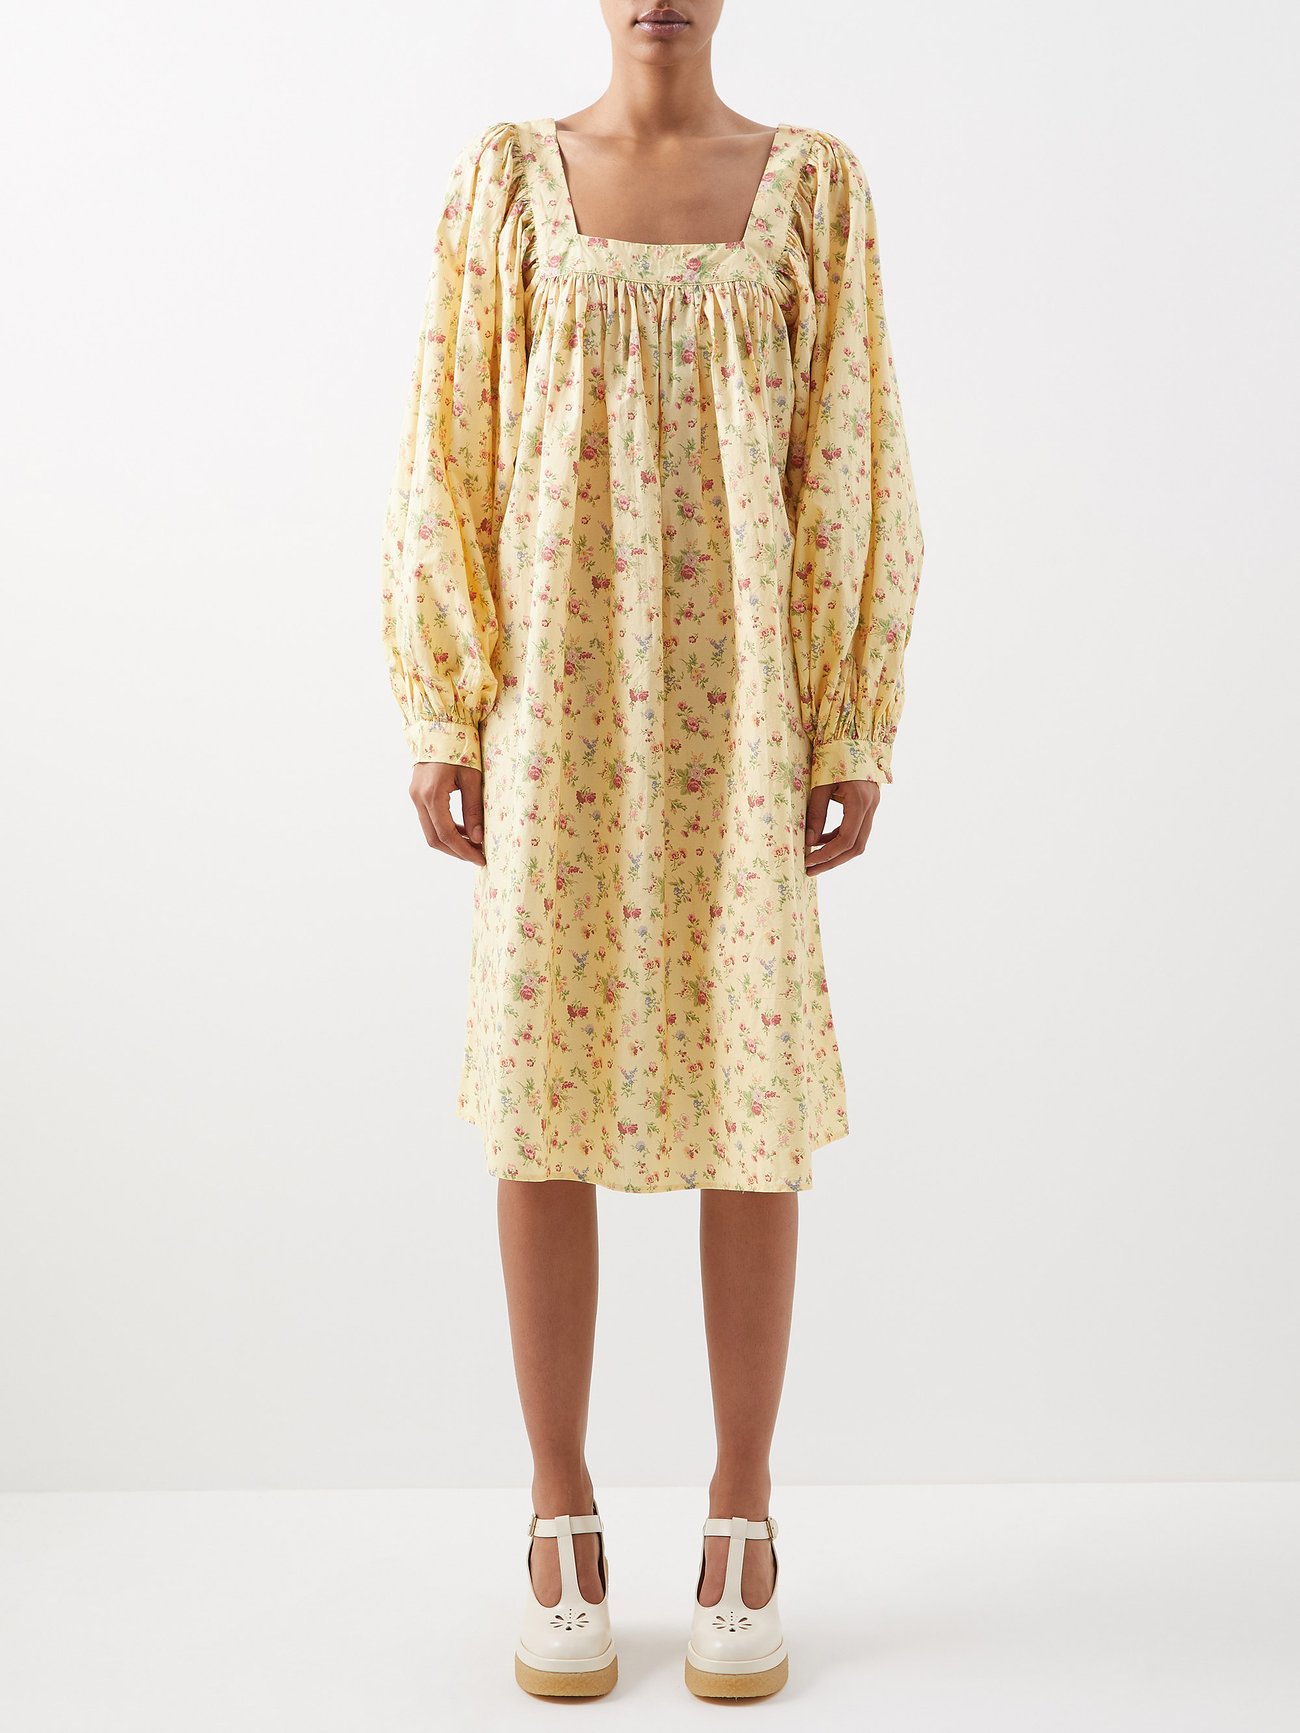 X Laura Ashley Beaumaris floral-print cotton dress